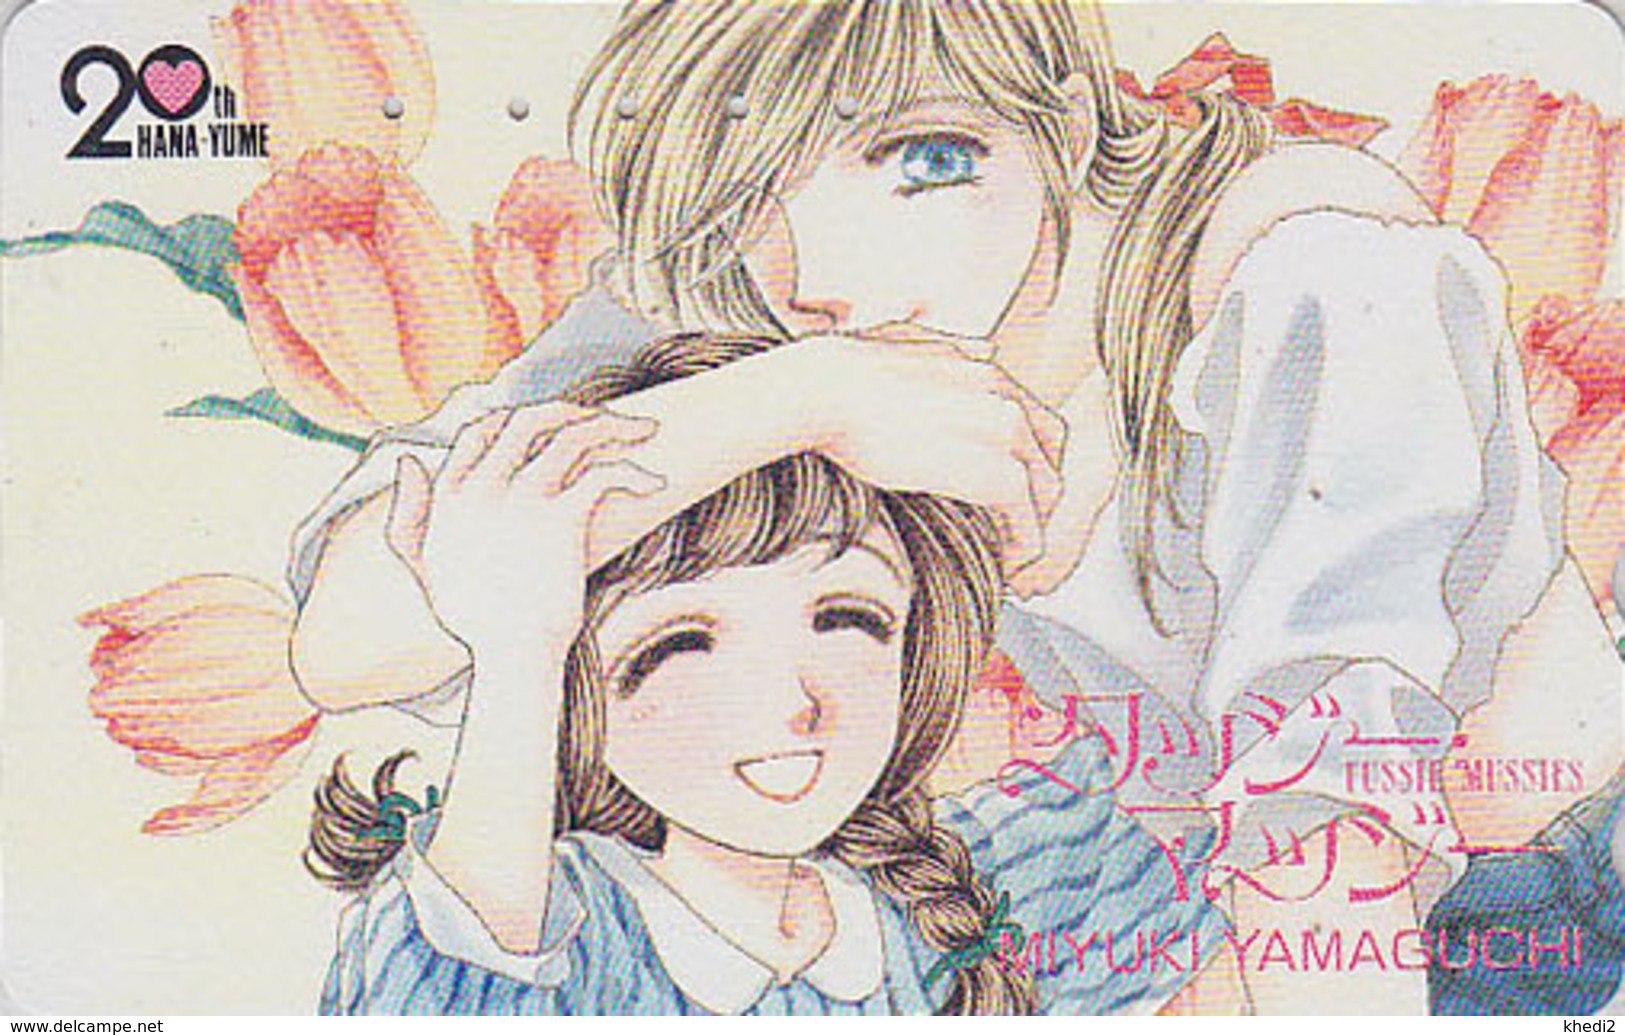 Télécarte Japon / 110-011 - MANGA - HANA TO YUME / Série 20th - TUSSIE MUSSIES By M. YAMAGUCHI - Japan Phonecard - 8903 - BD